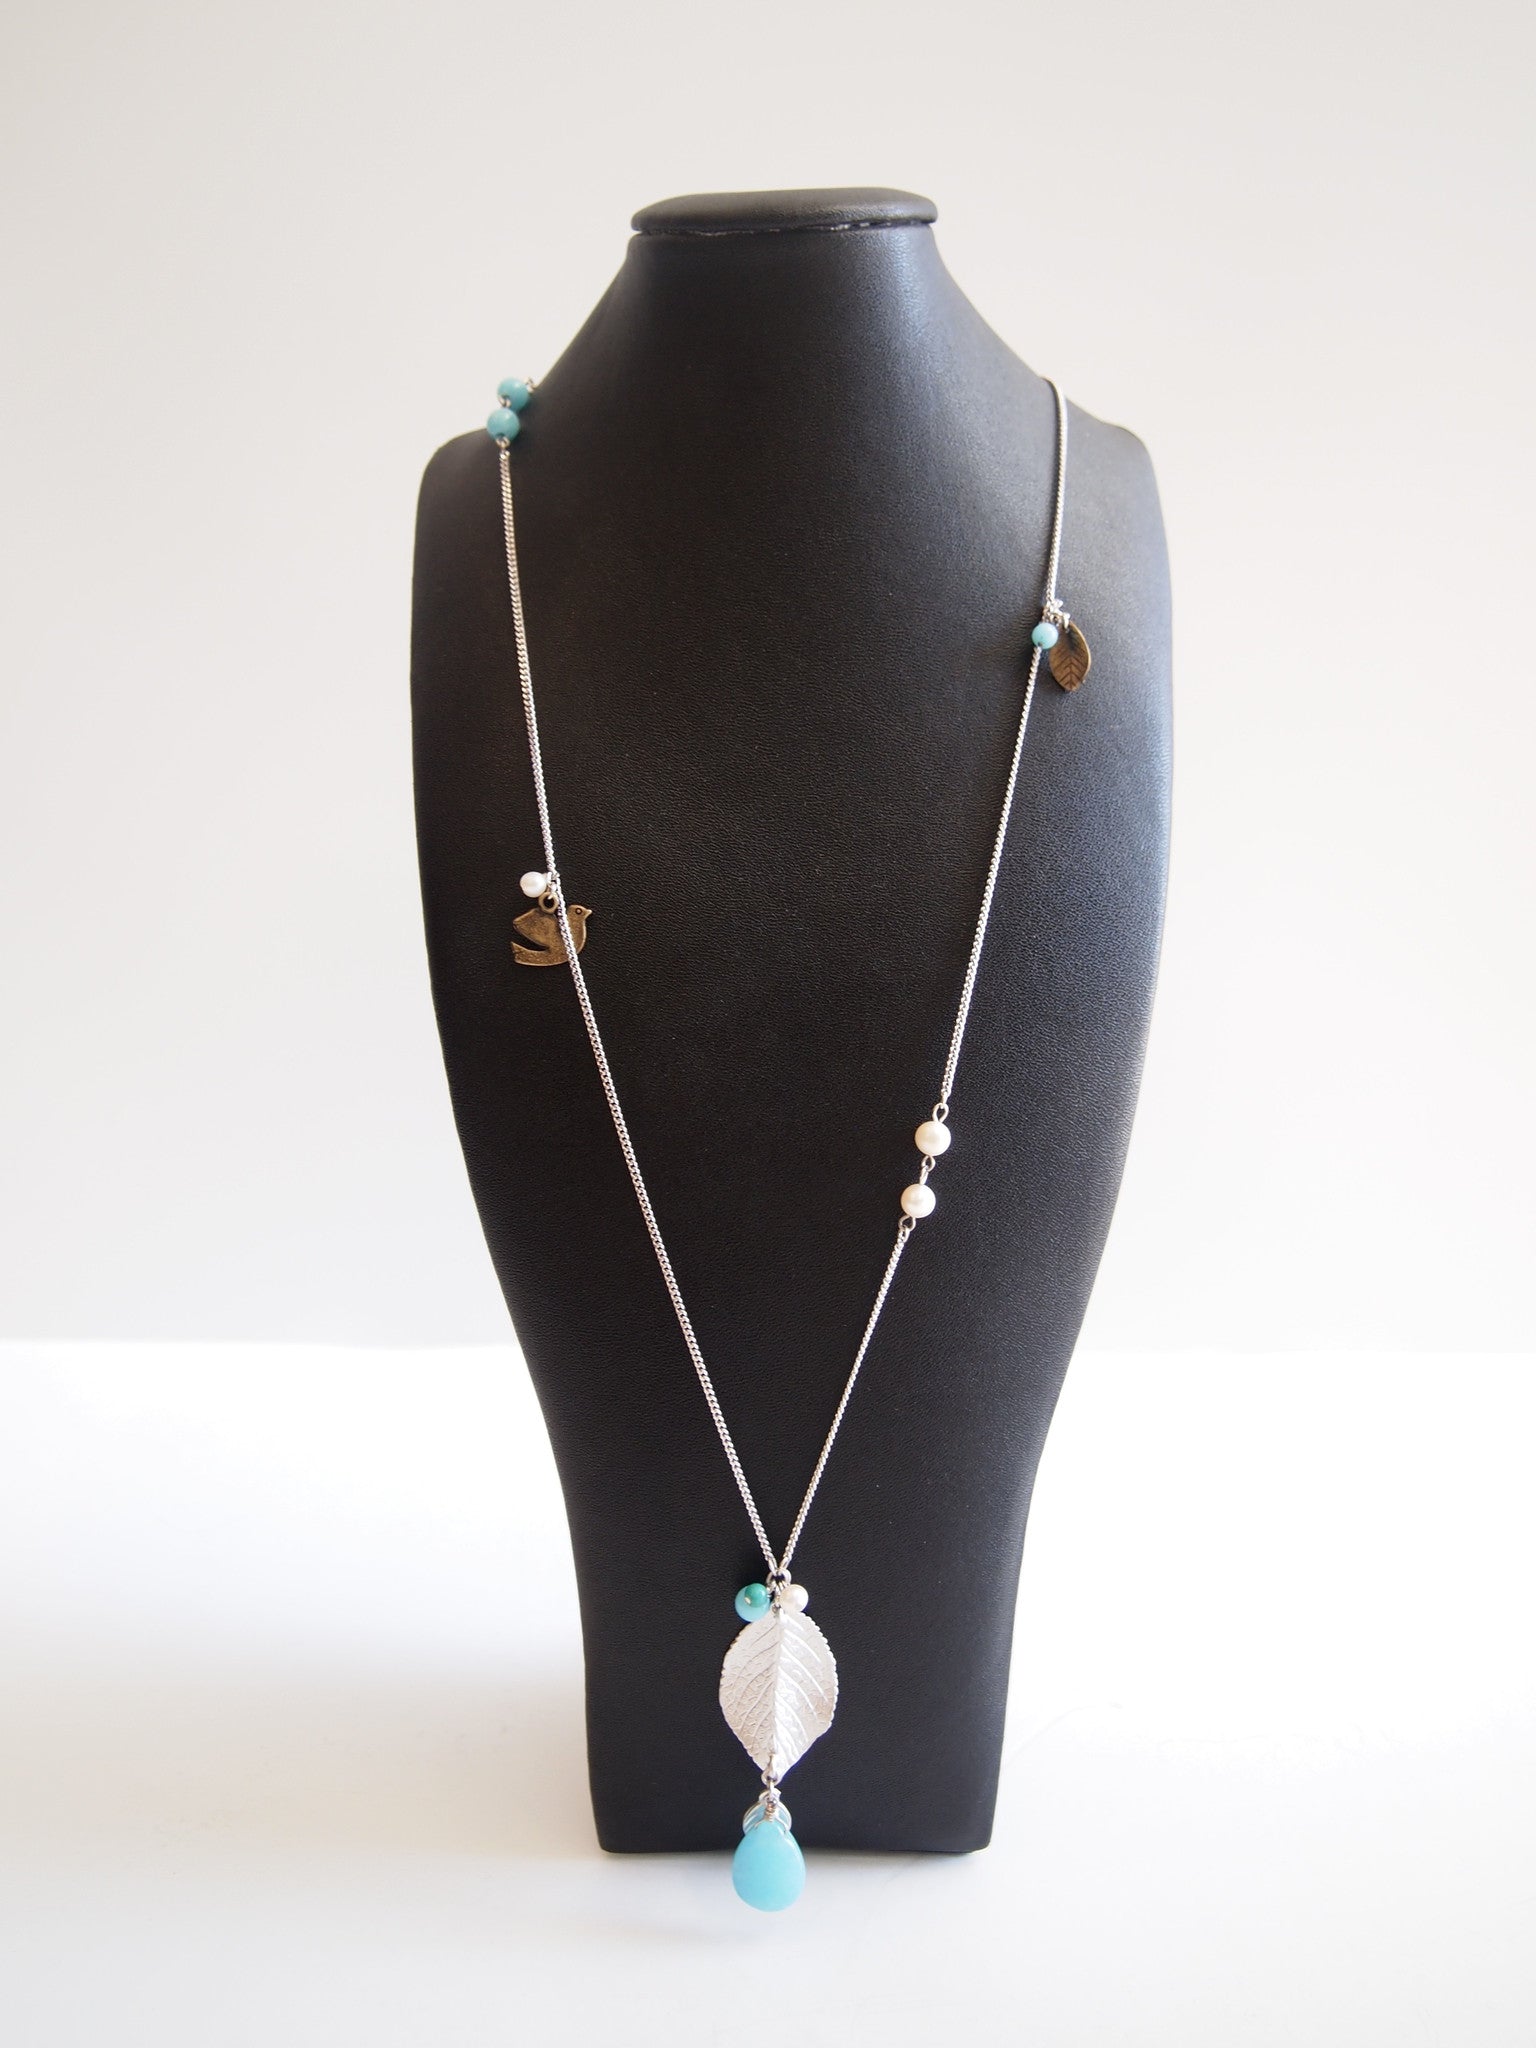 Handmade necklace with semi precious stone